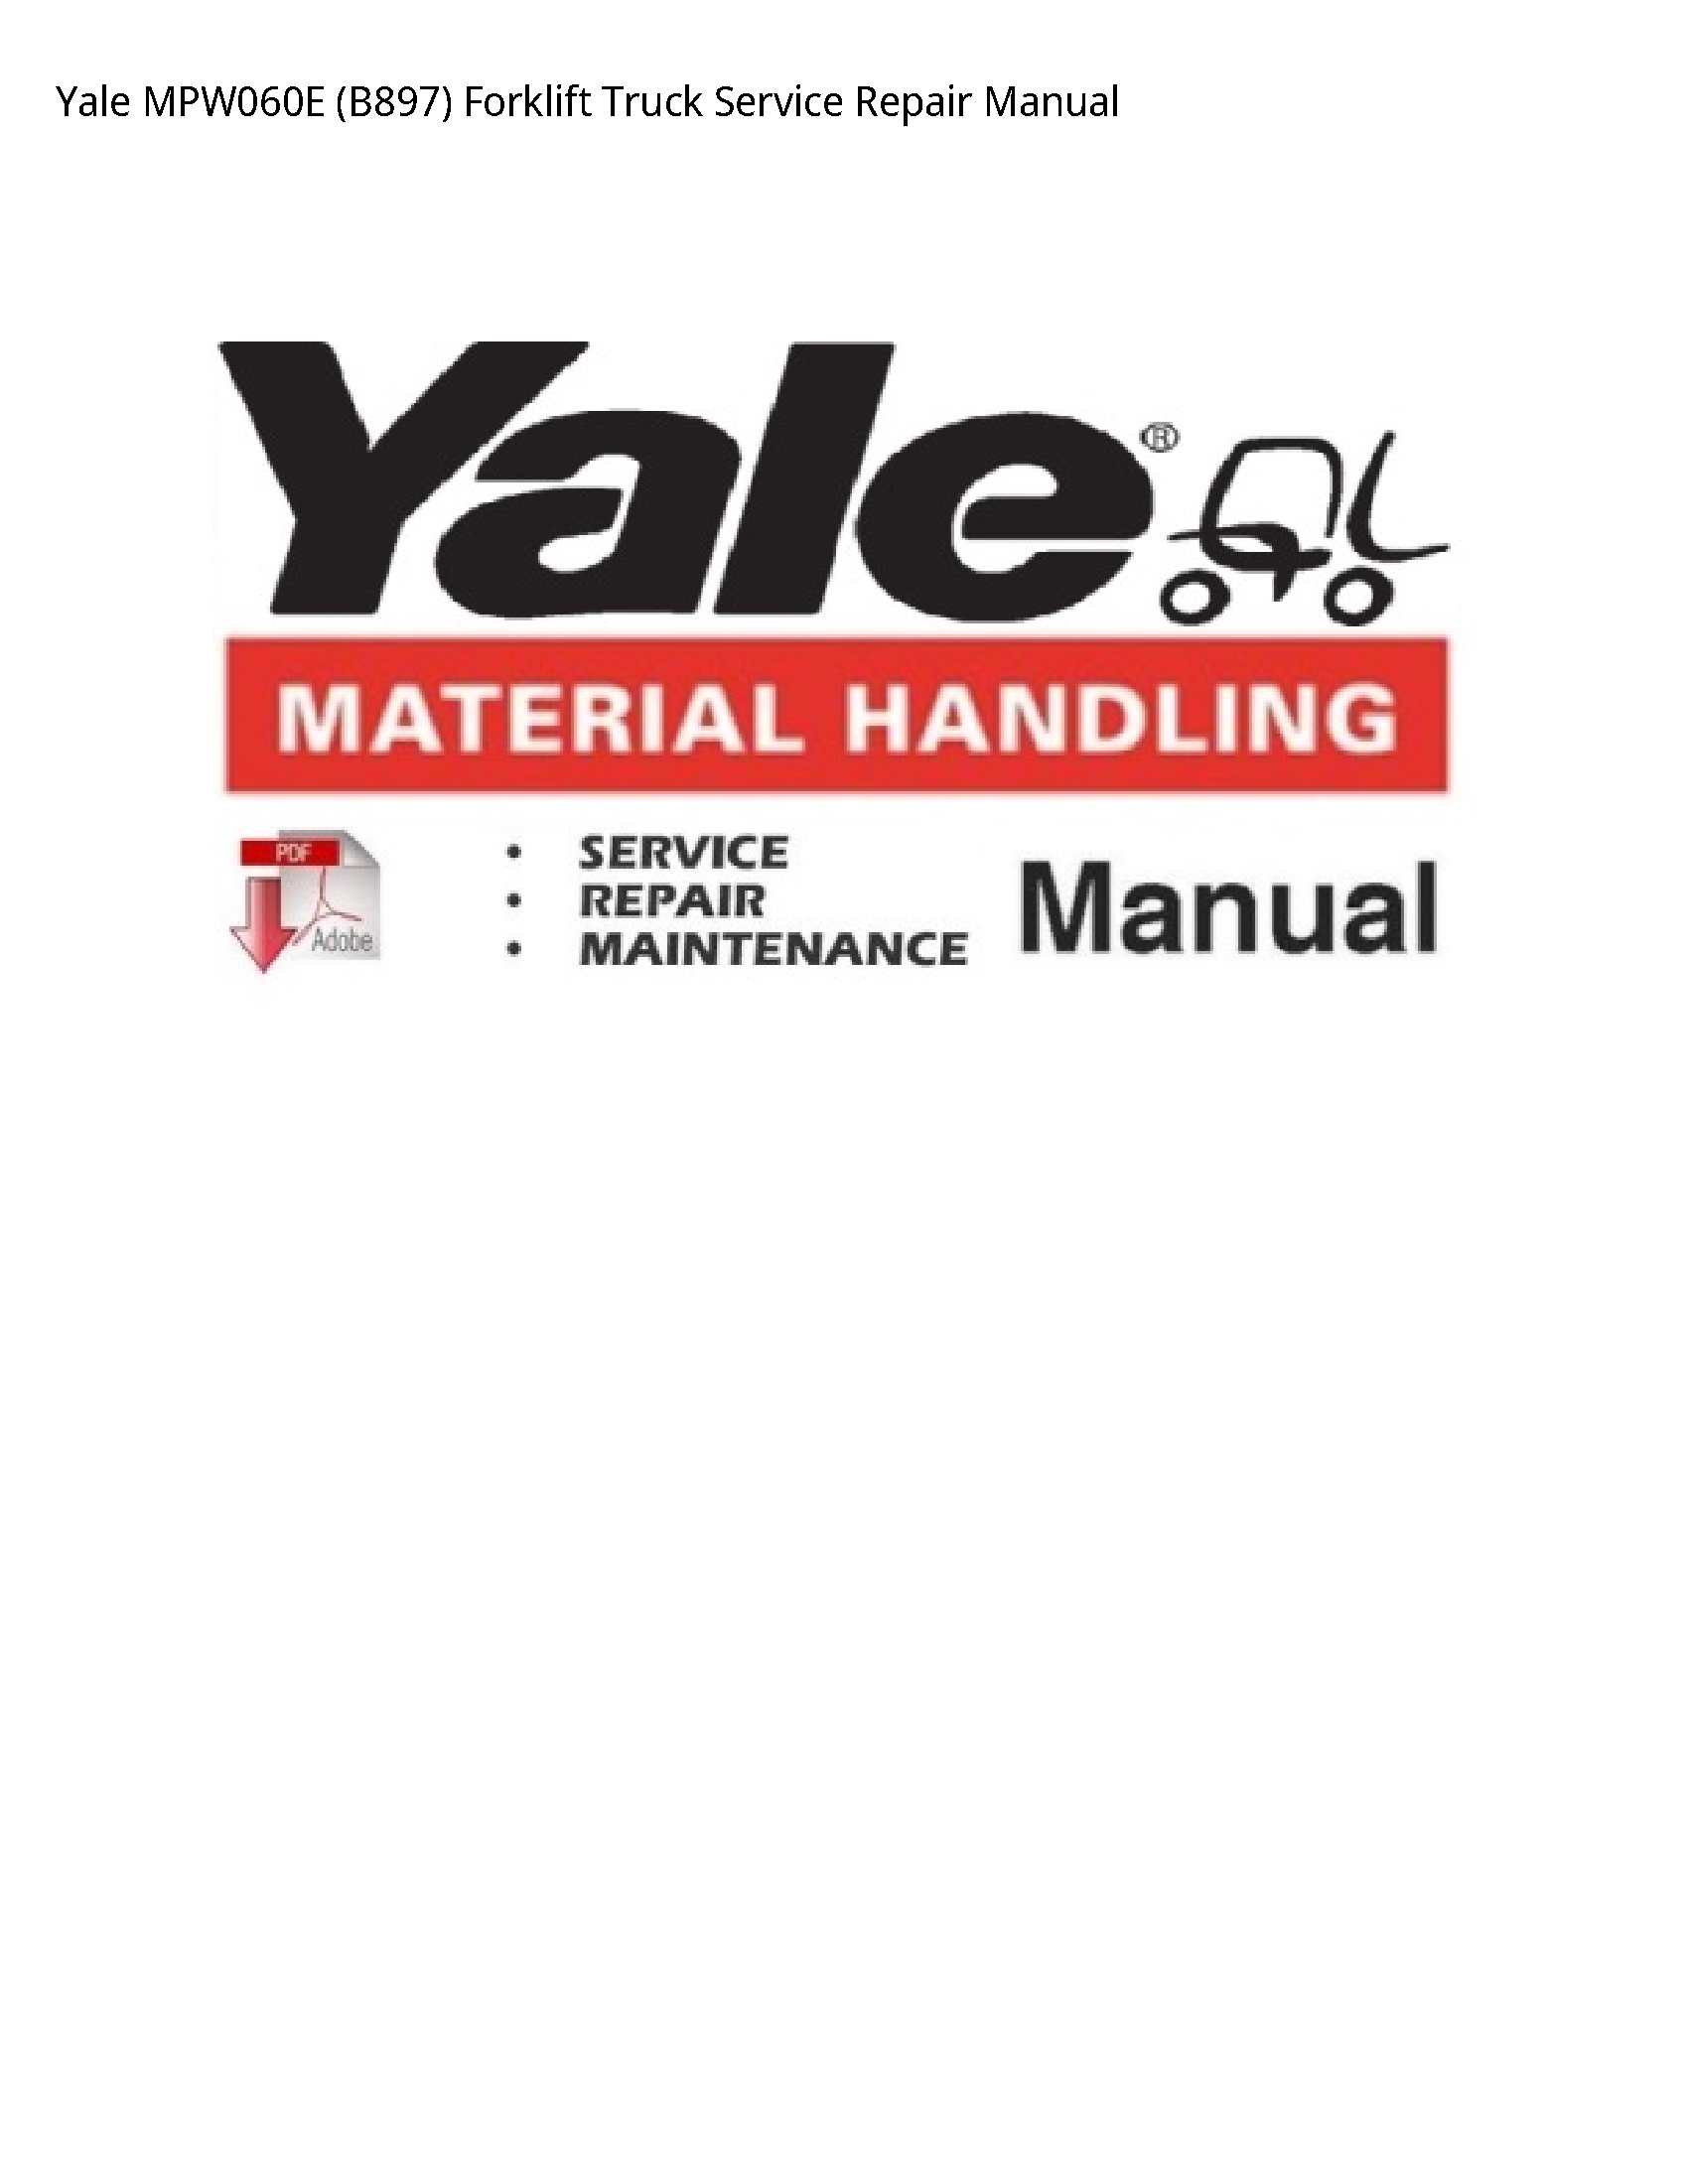 Yale MPW060E Forklift Truck manual